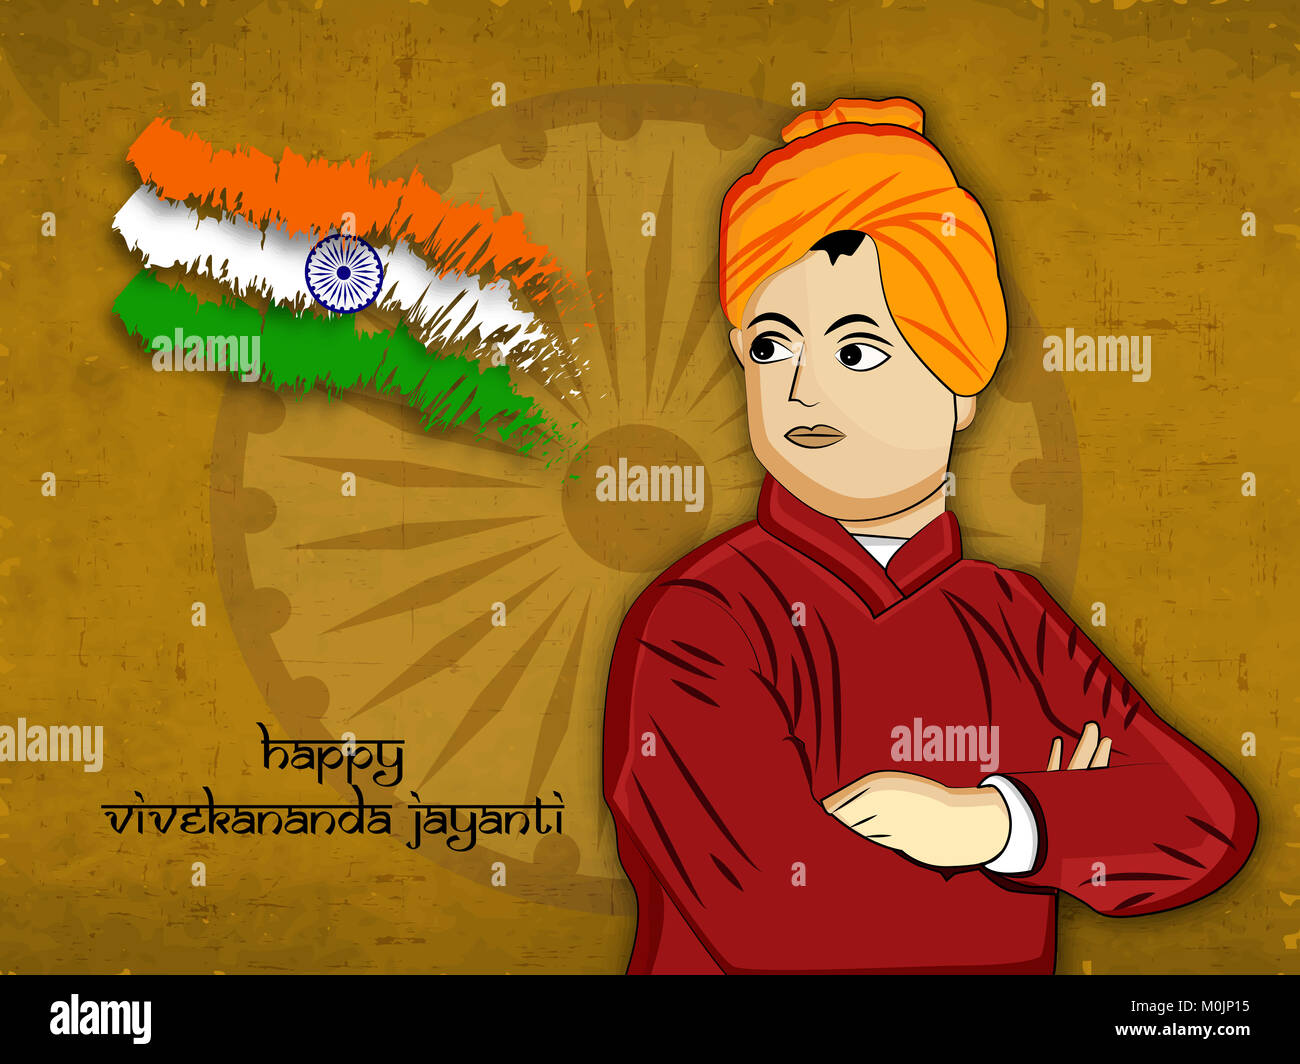 illustration of Swami Vivekanand jayanti background Stock Photo - Alamy